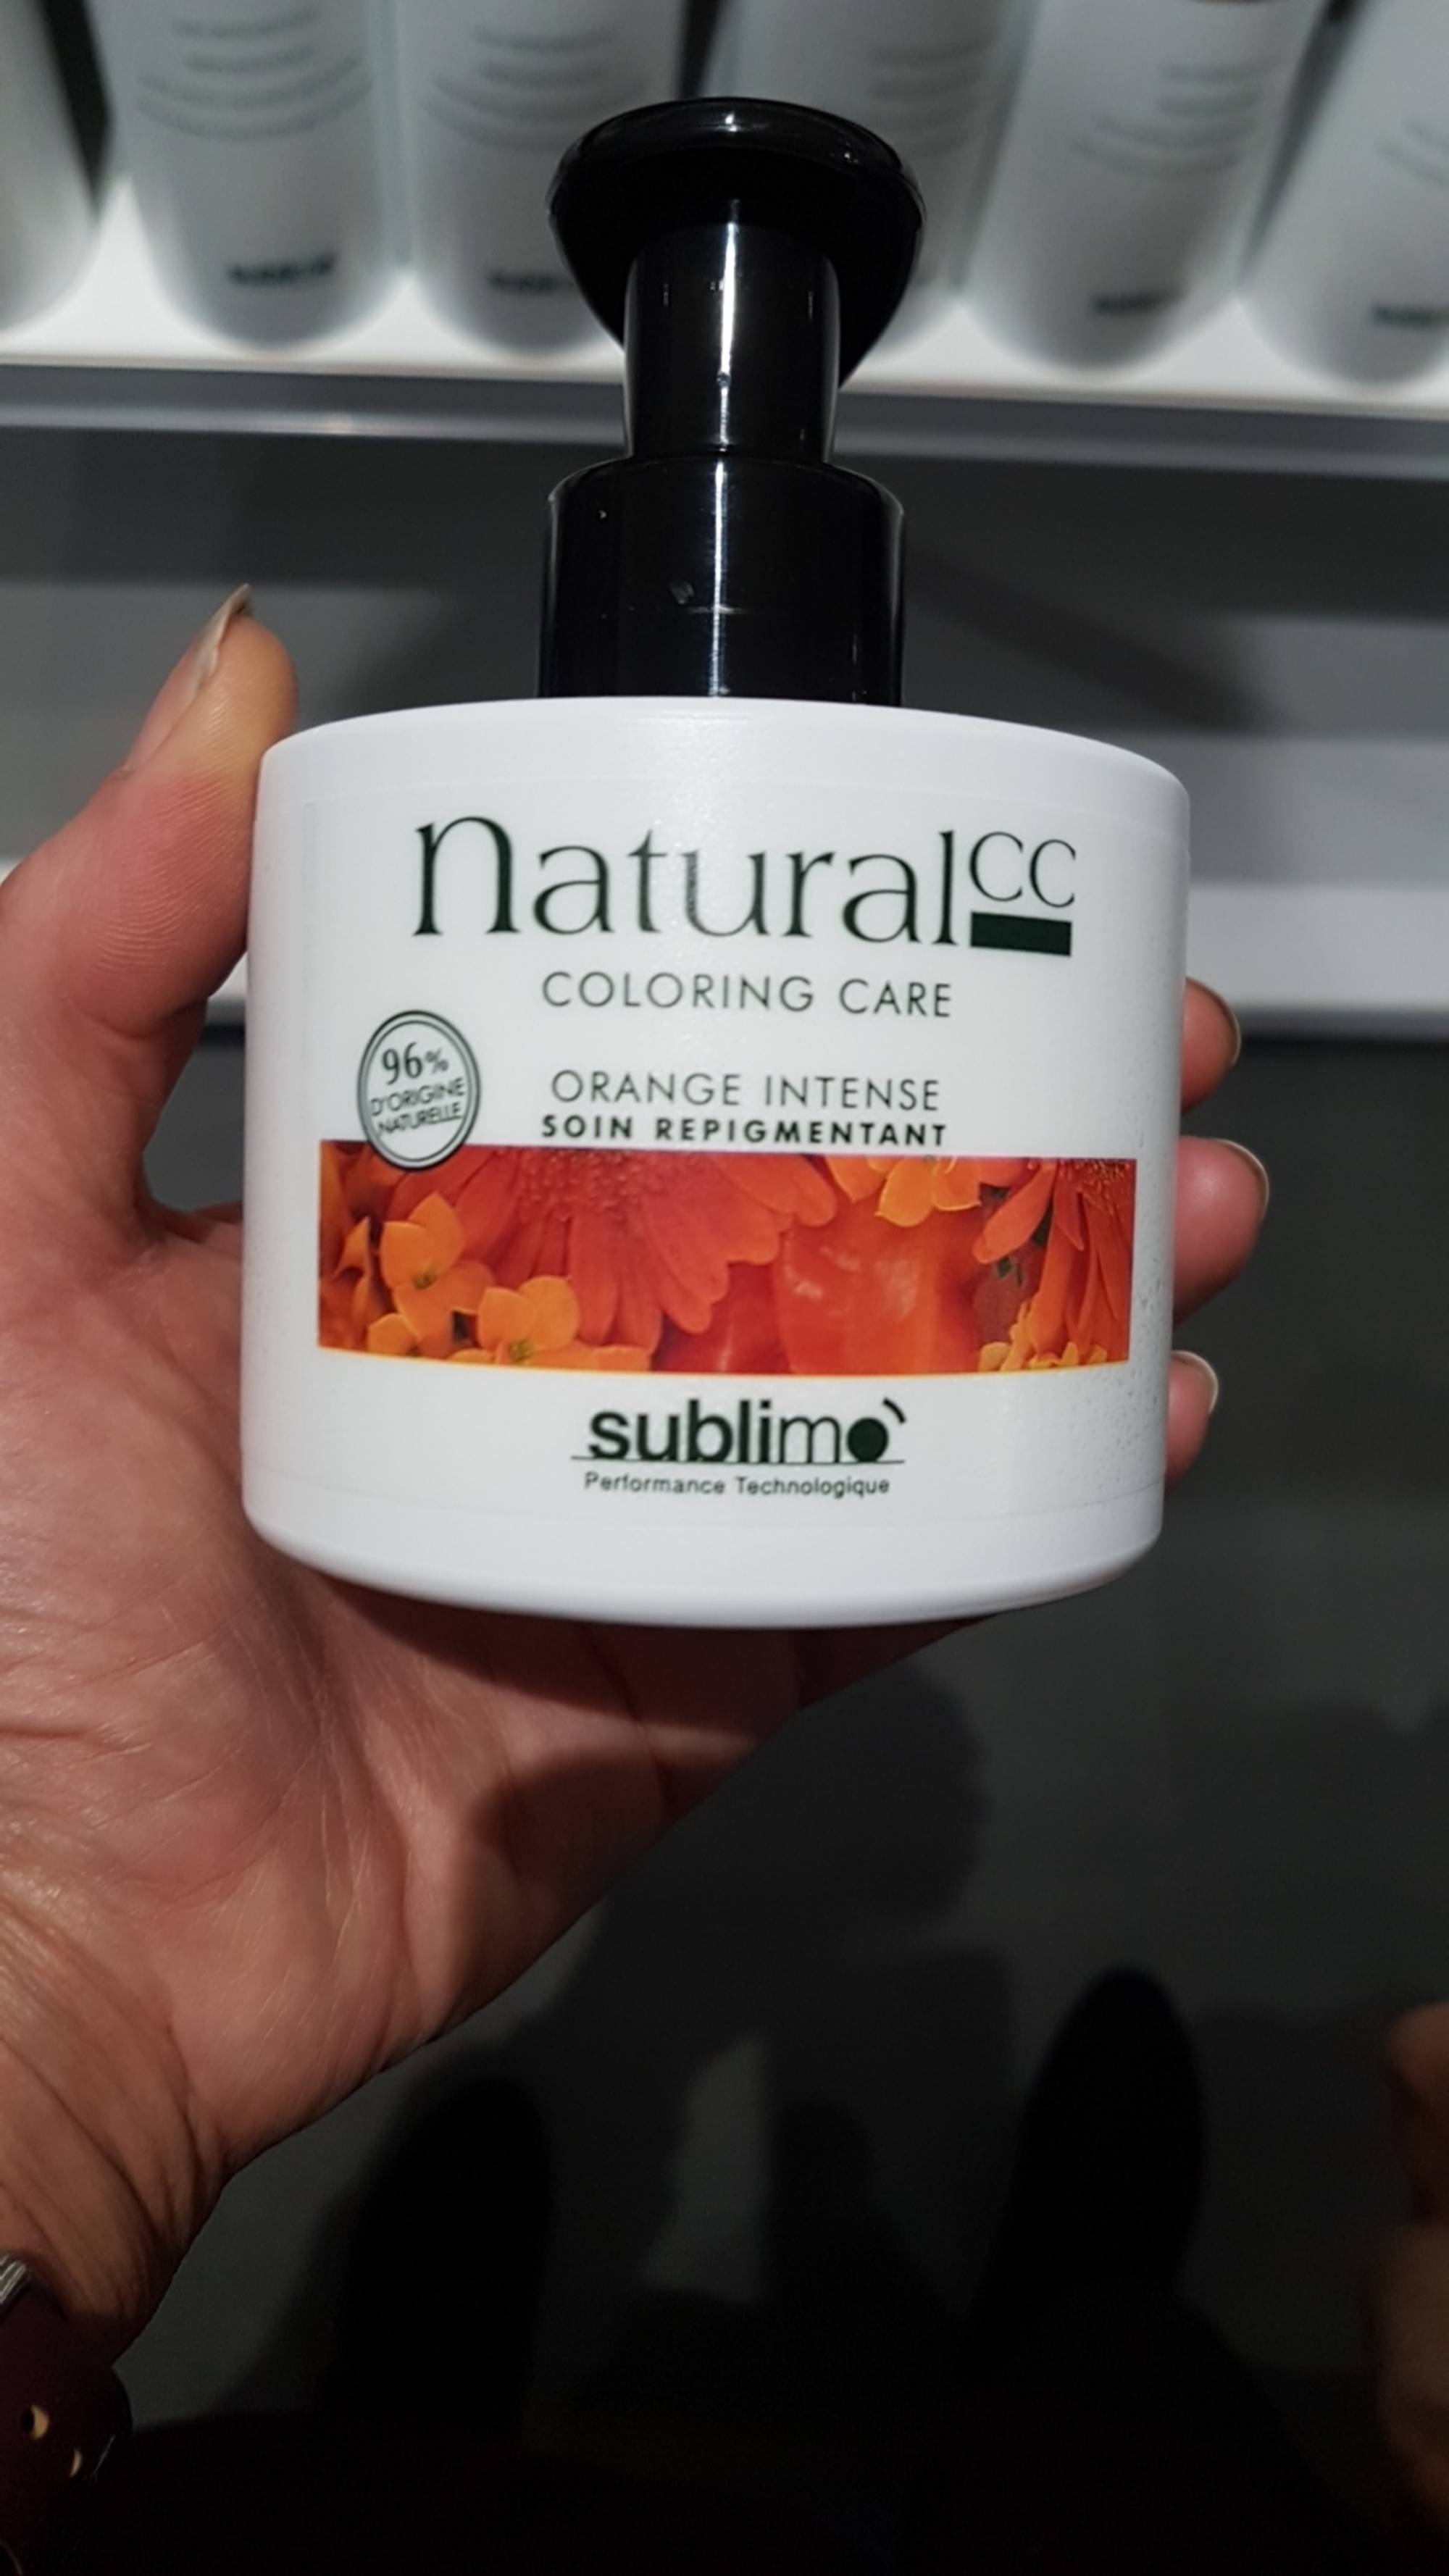 SUBLIMO - Natural CC - Soin repigmentant orange intense